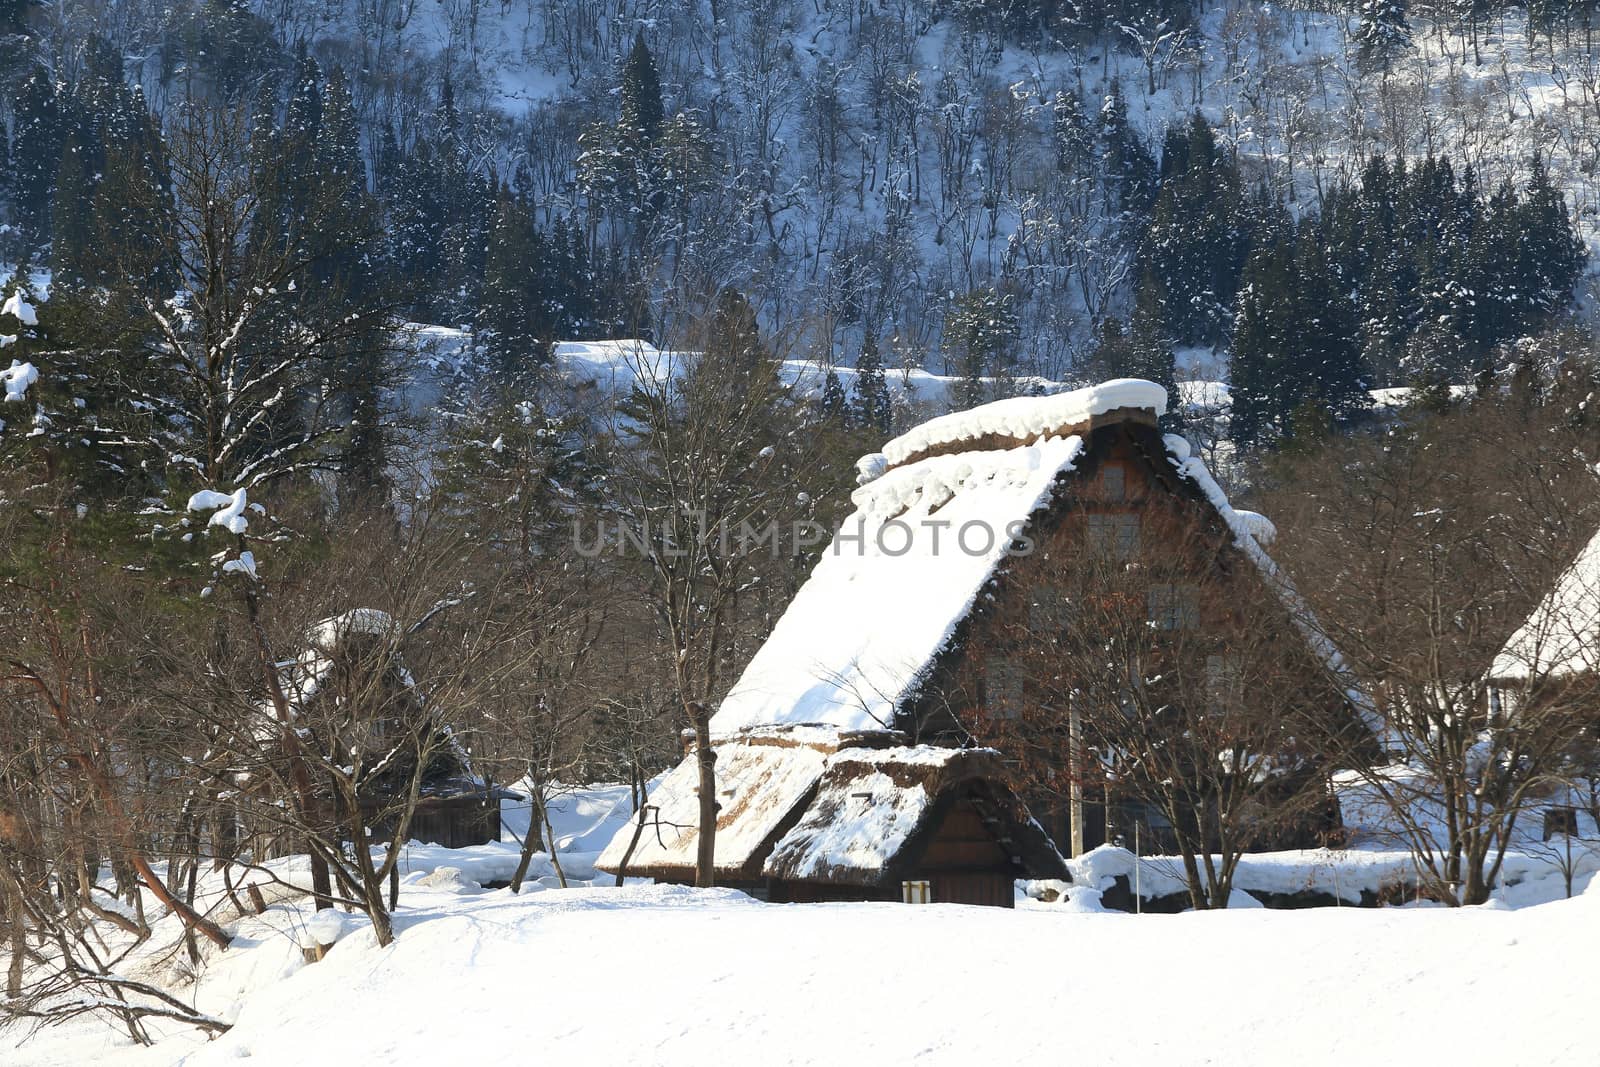 Shirakawa go village hut by rufous